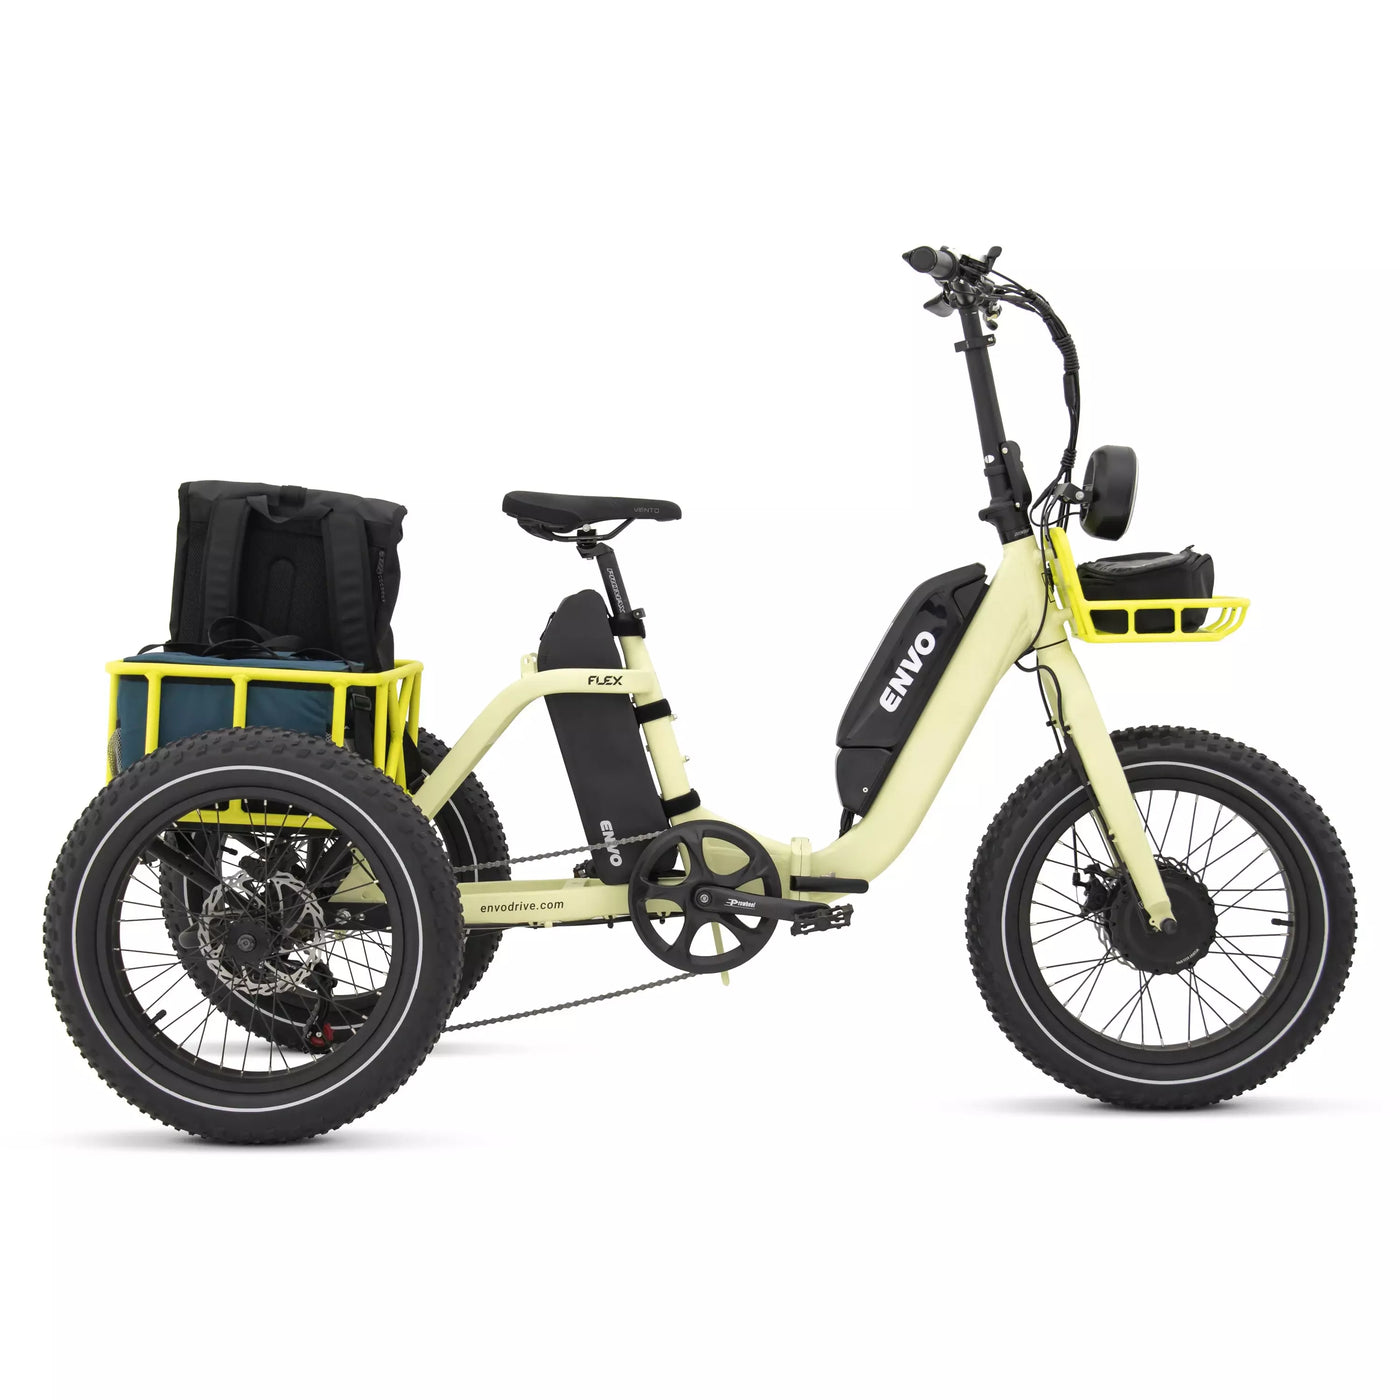 ENVO E50 Electric Scooter